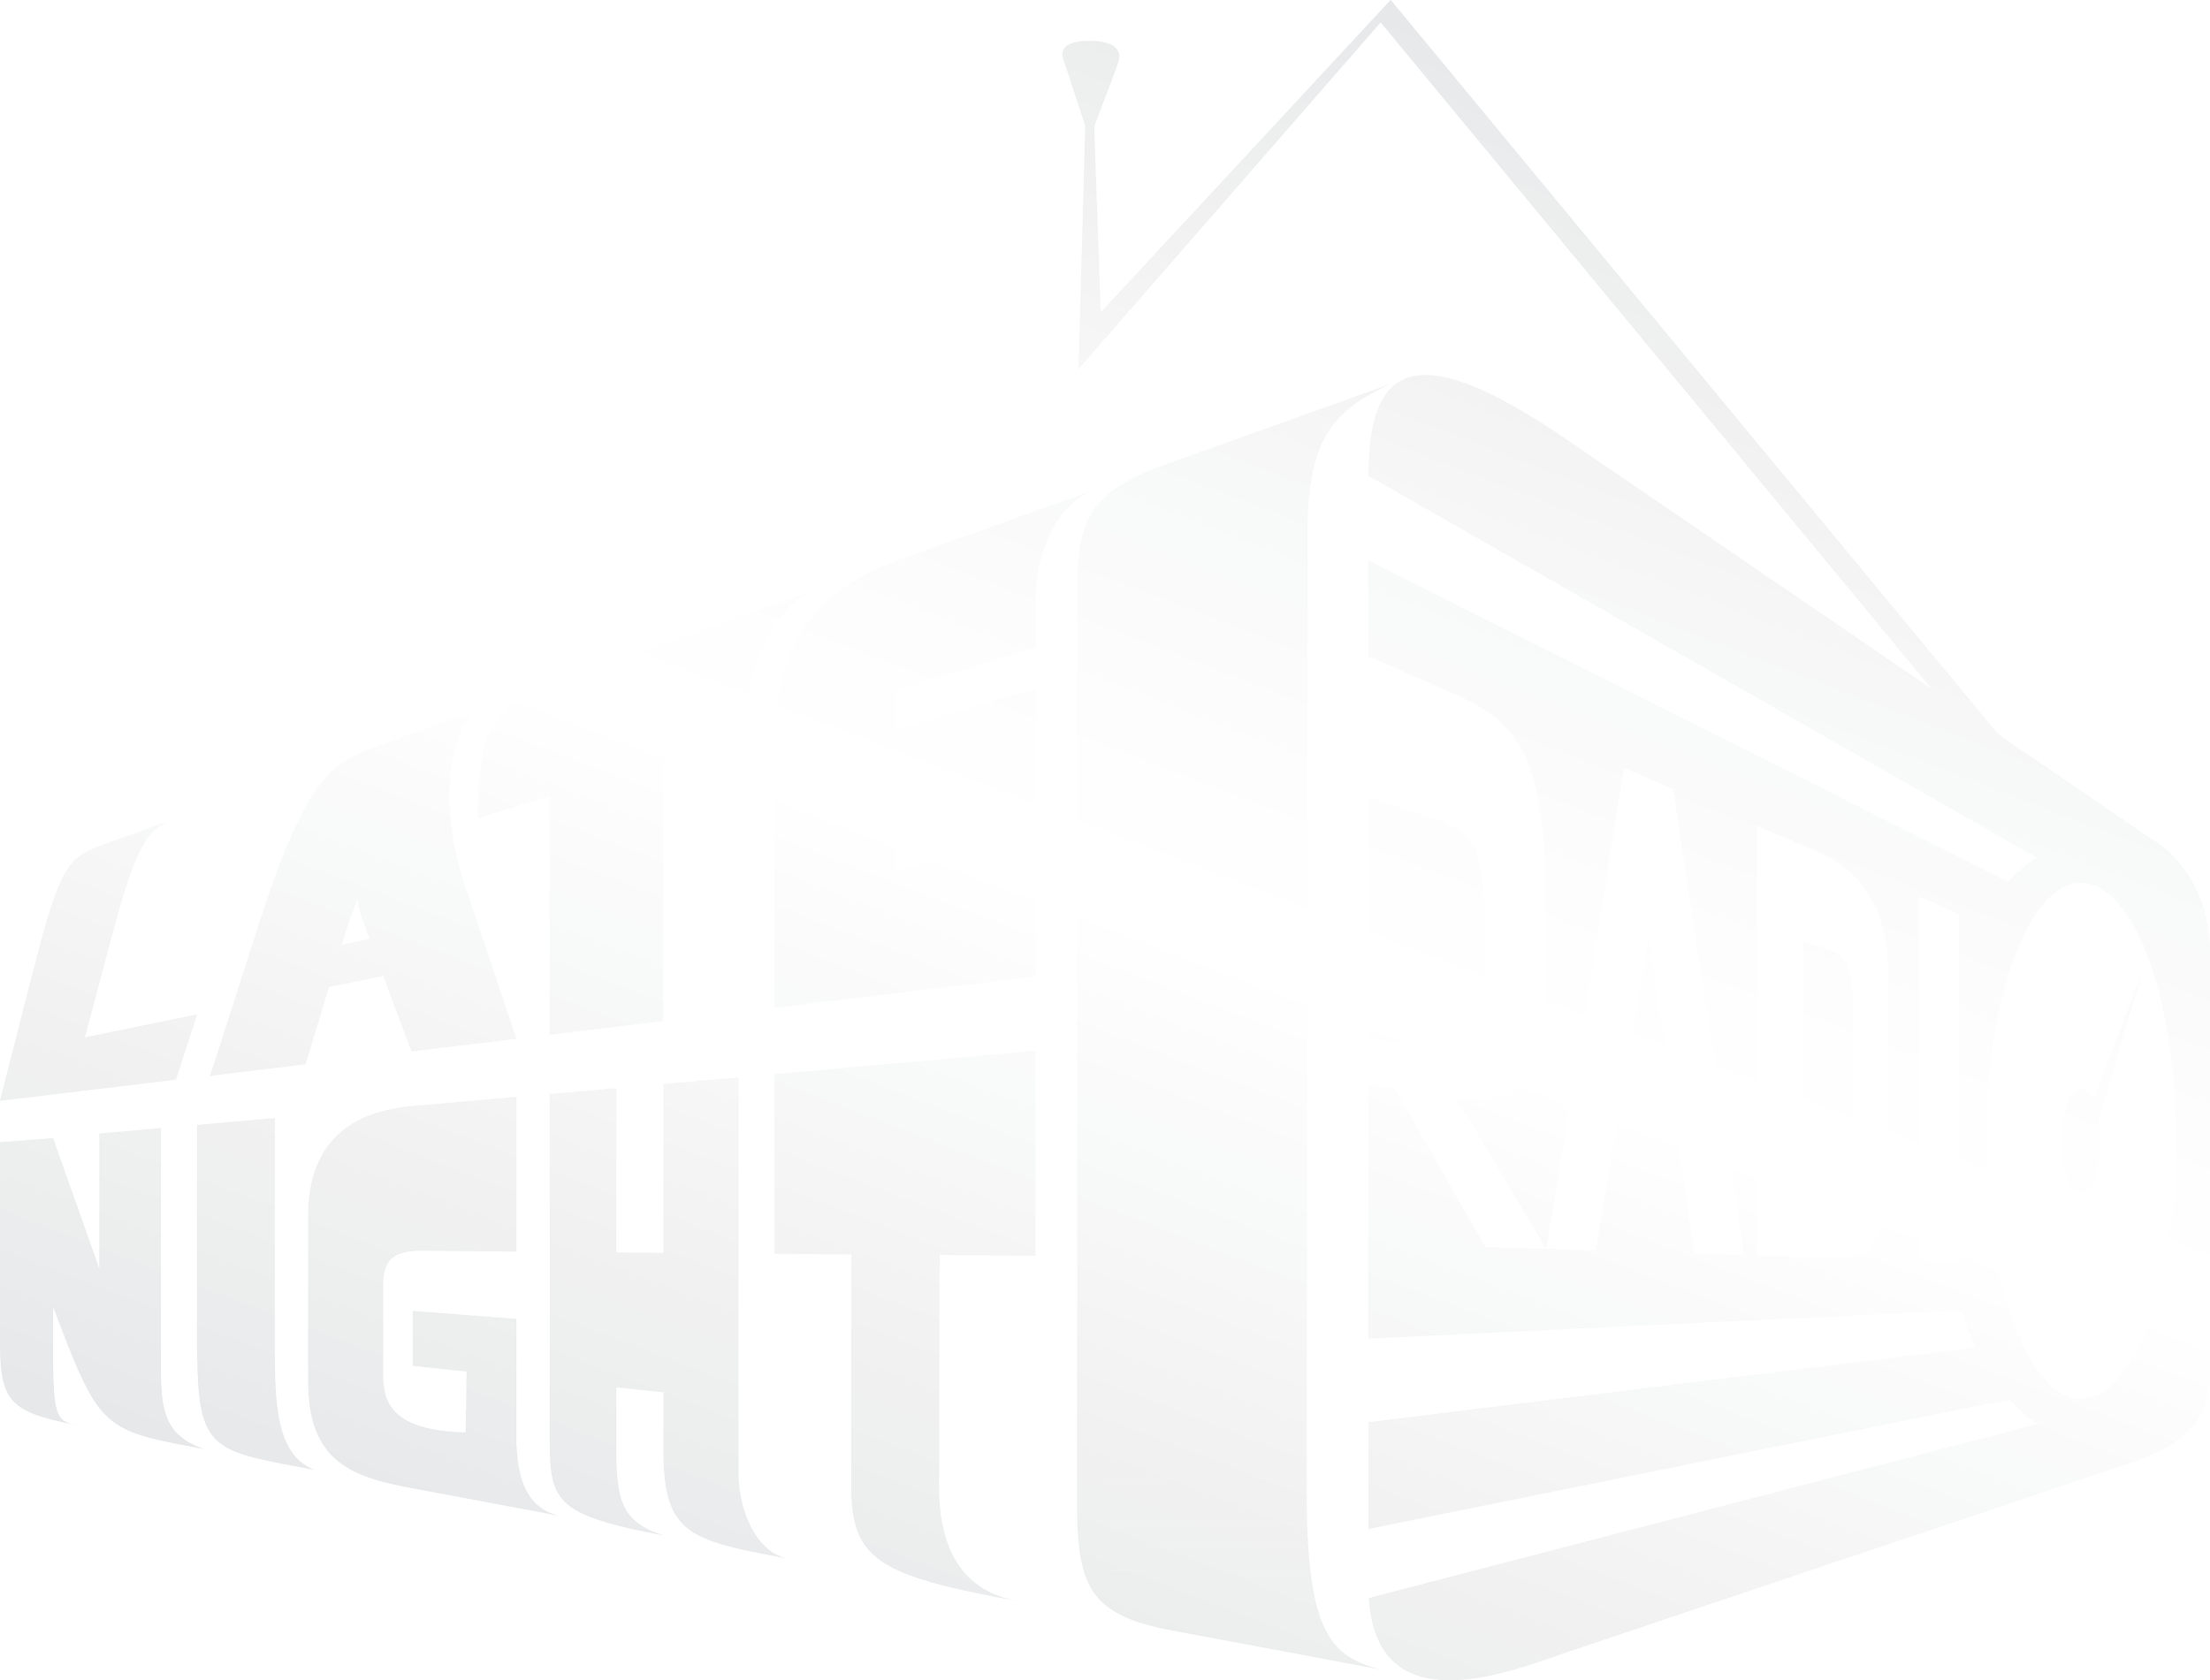 LATE NIGHT RADIO